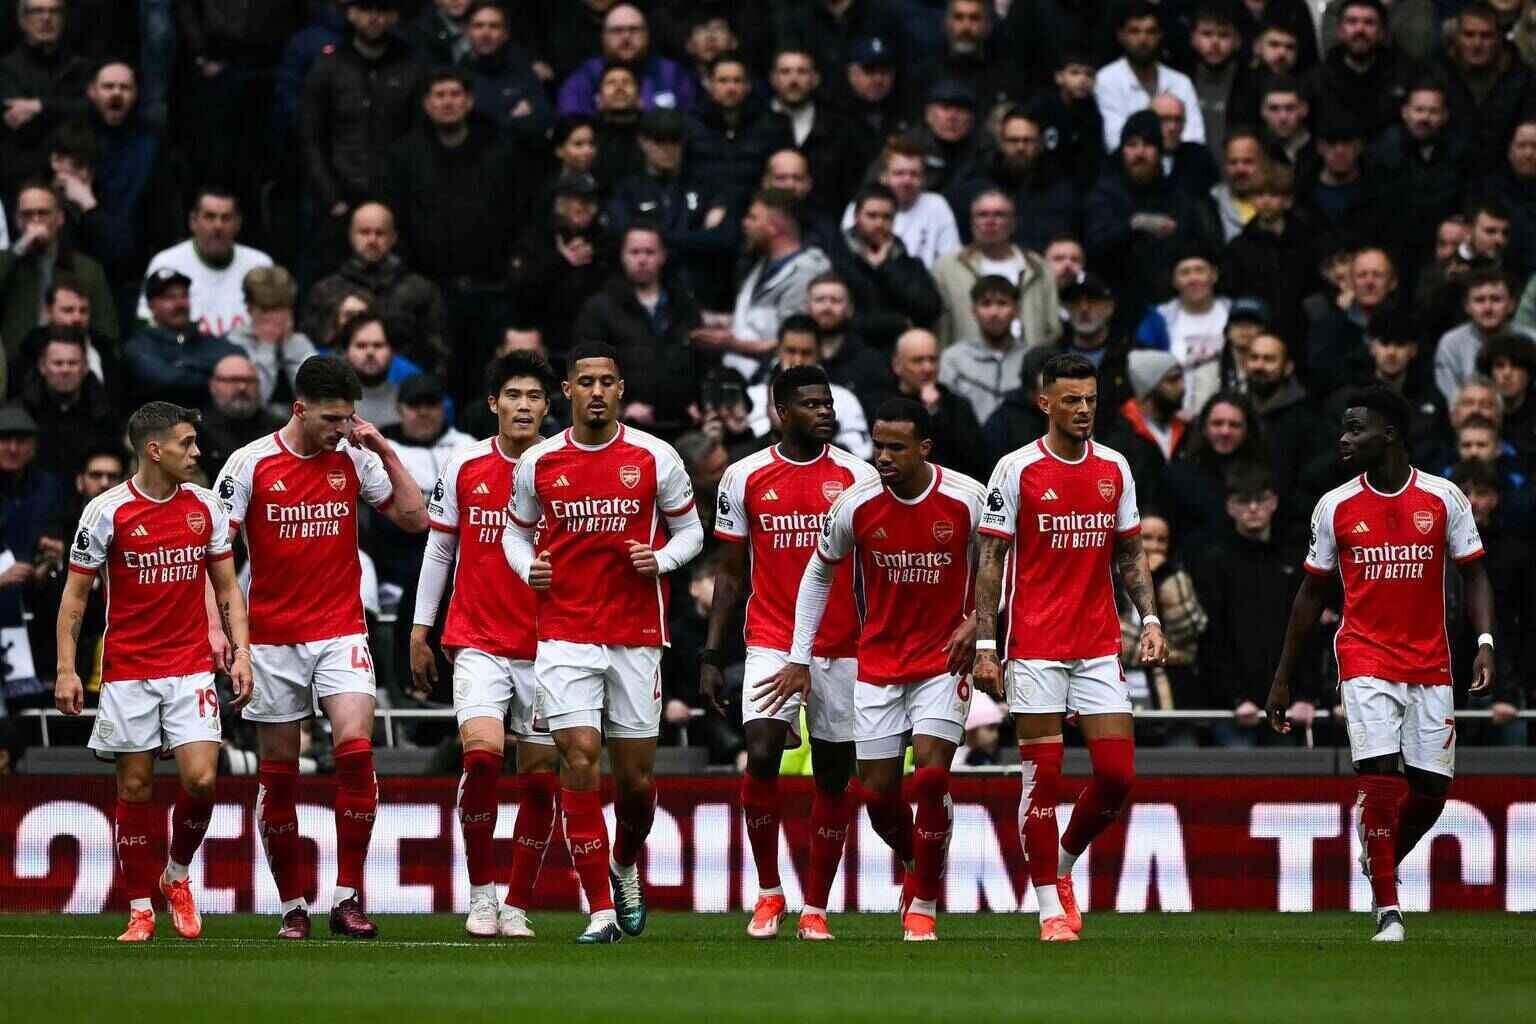 Arsenal vẫn tạm thời dẫn đầu Premier League sau 35 vòng đấu.  Ảnh: ARS